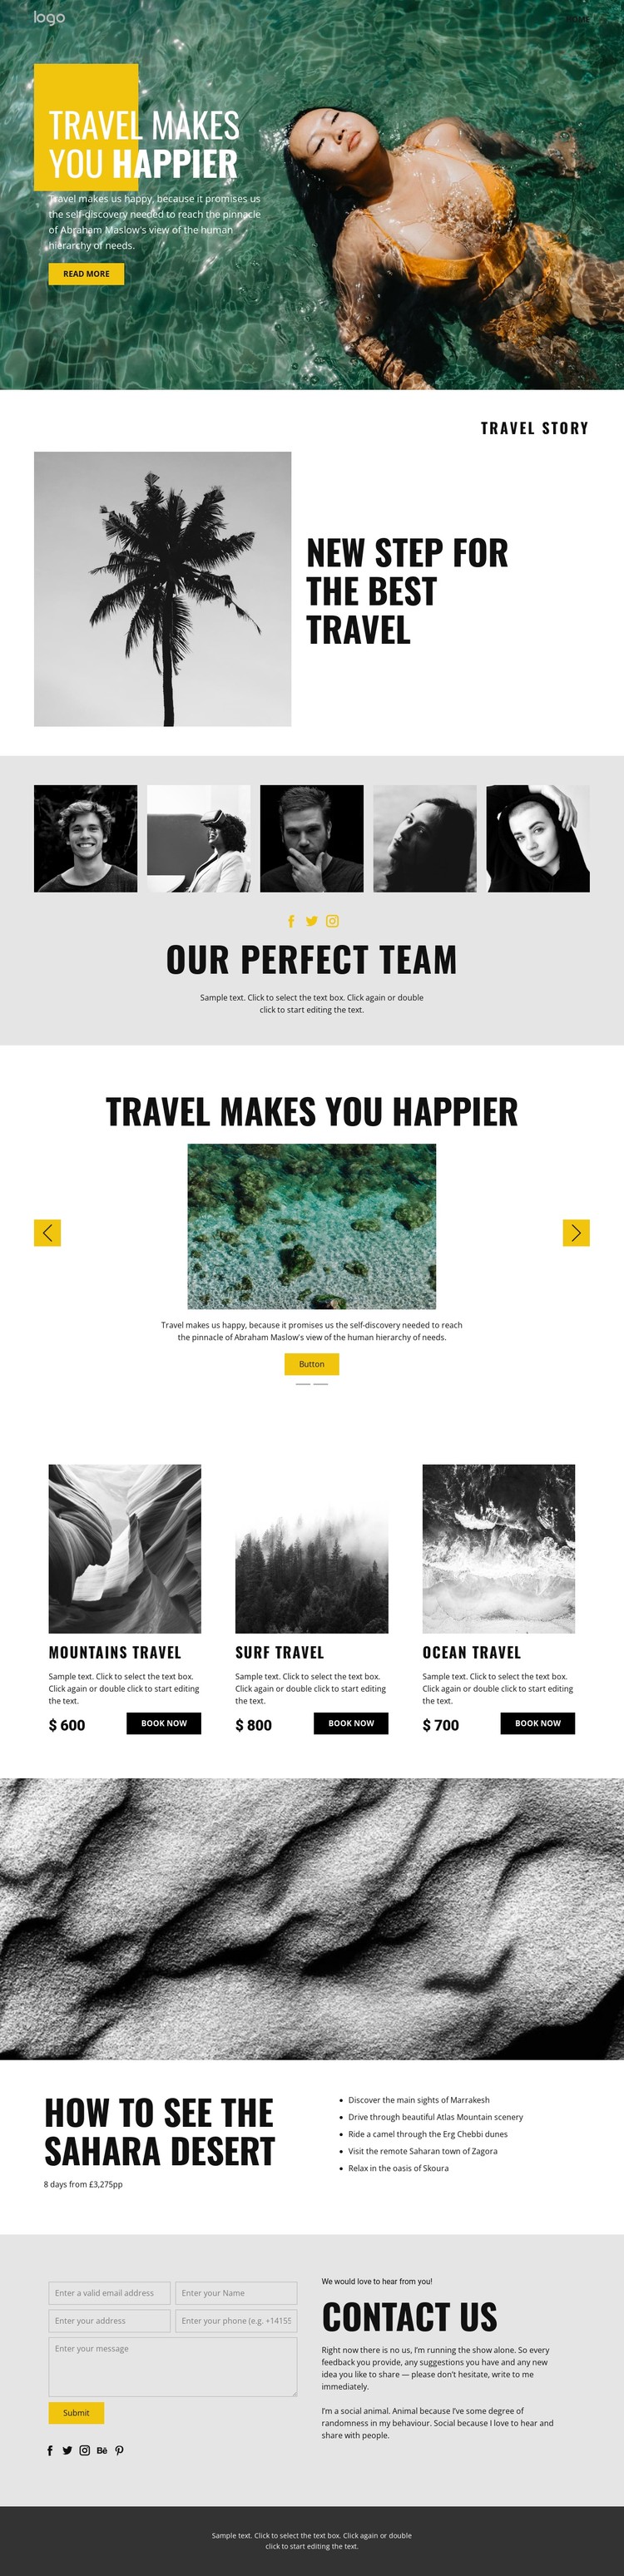 Happy people deserve travel CSS Template